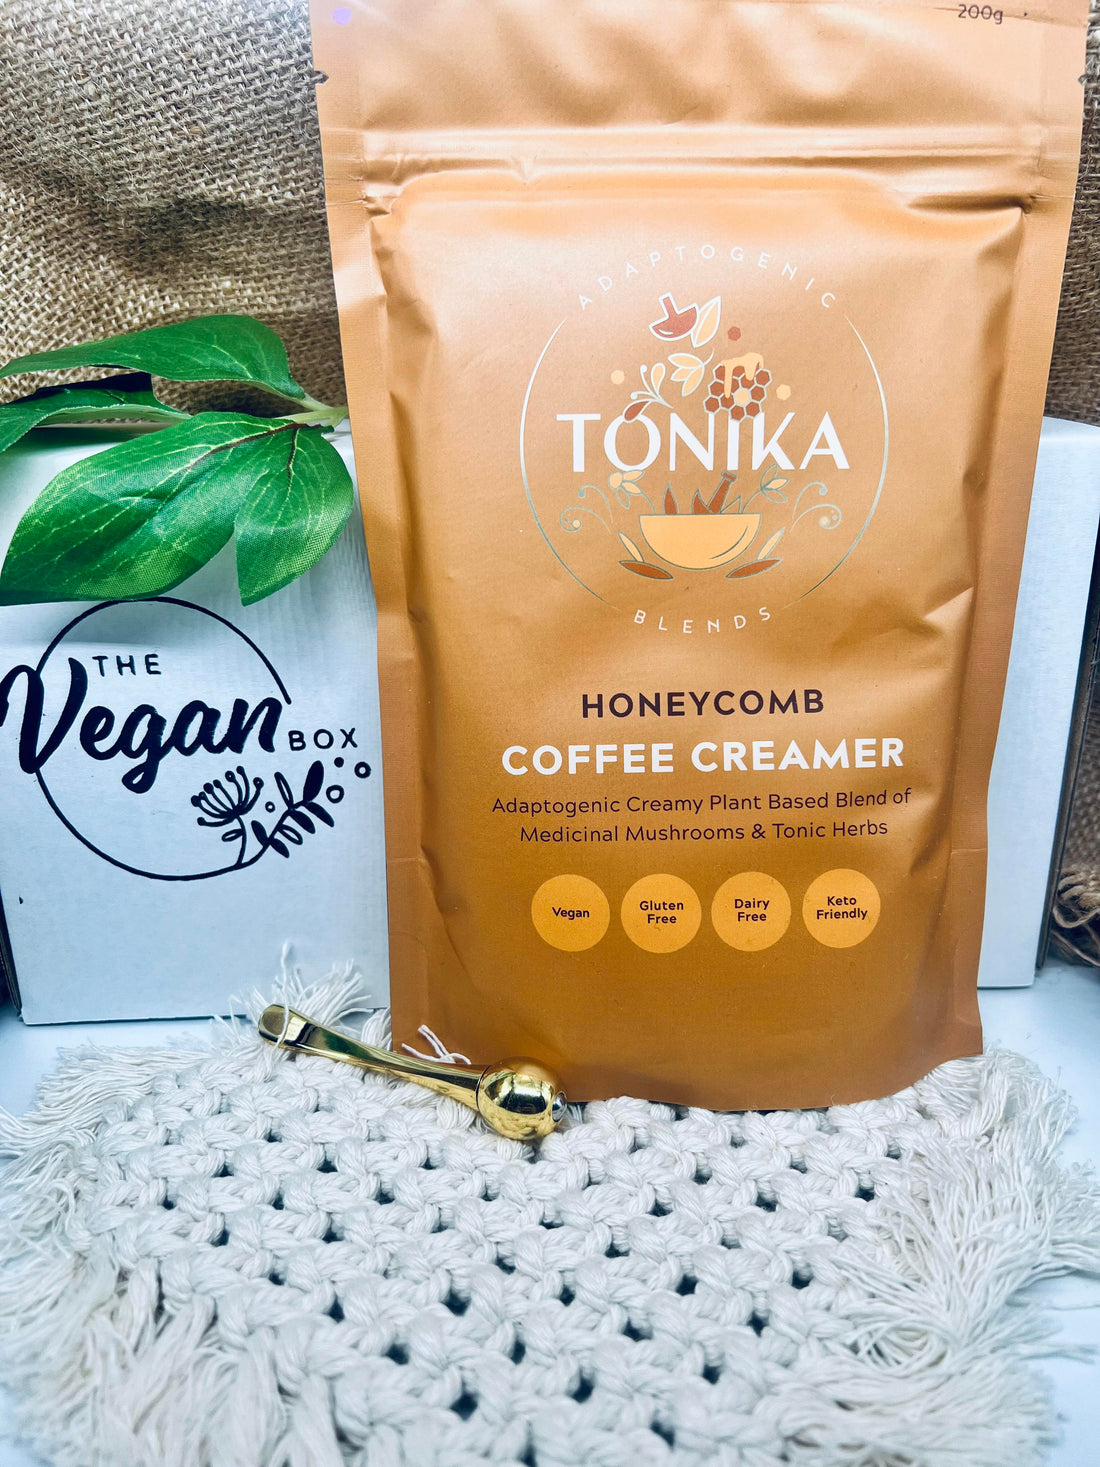 Delicious Vegan Coffee Creamers! Tonika Co